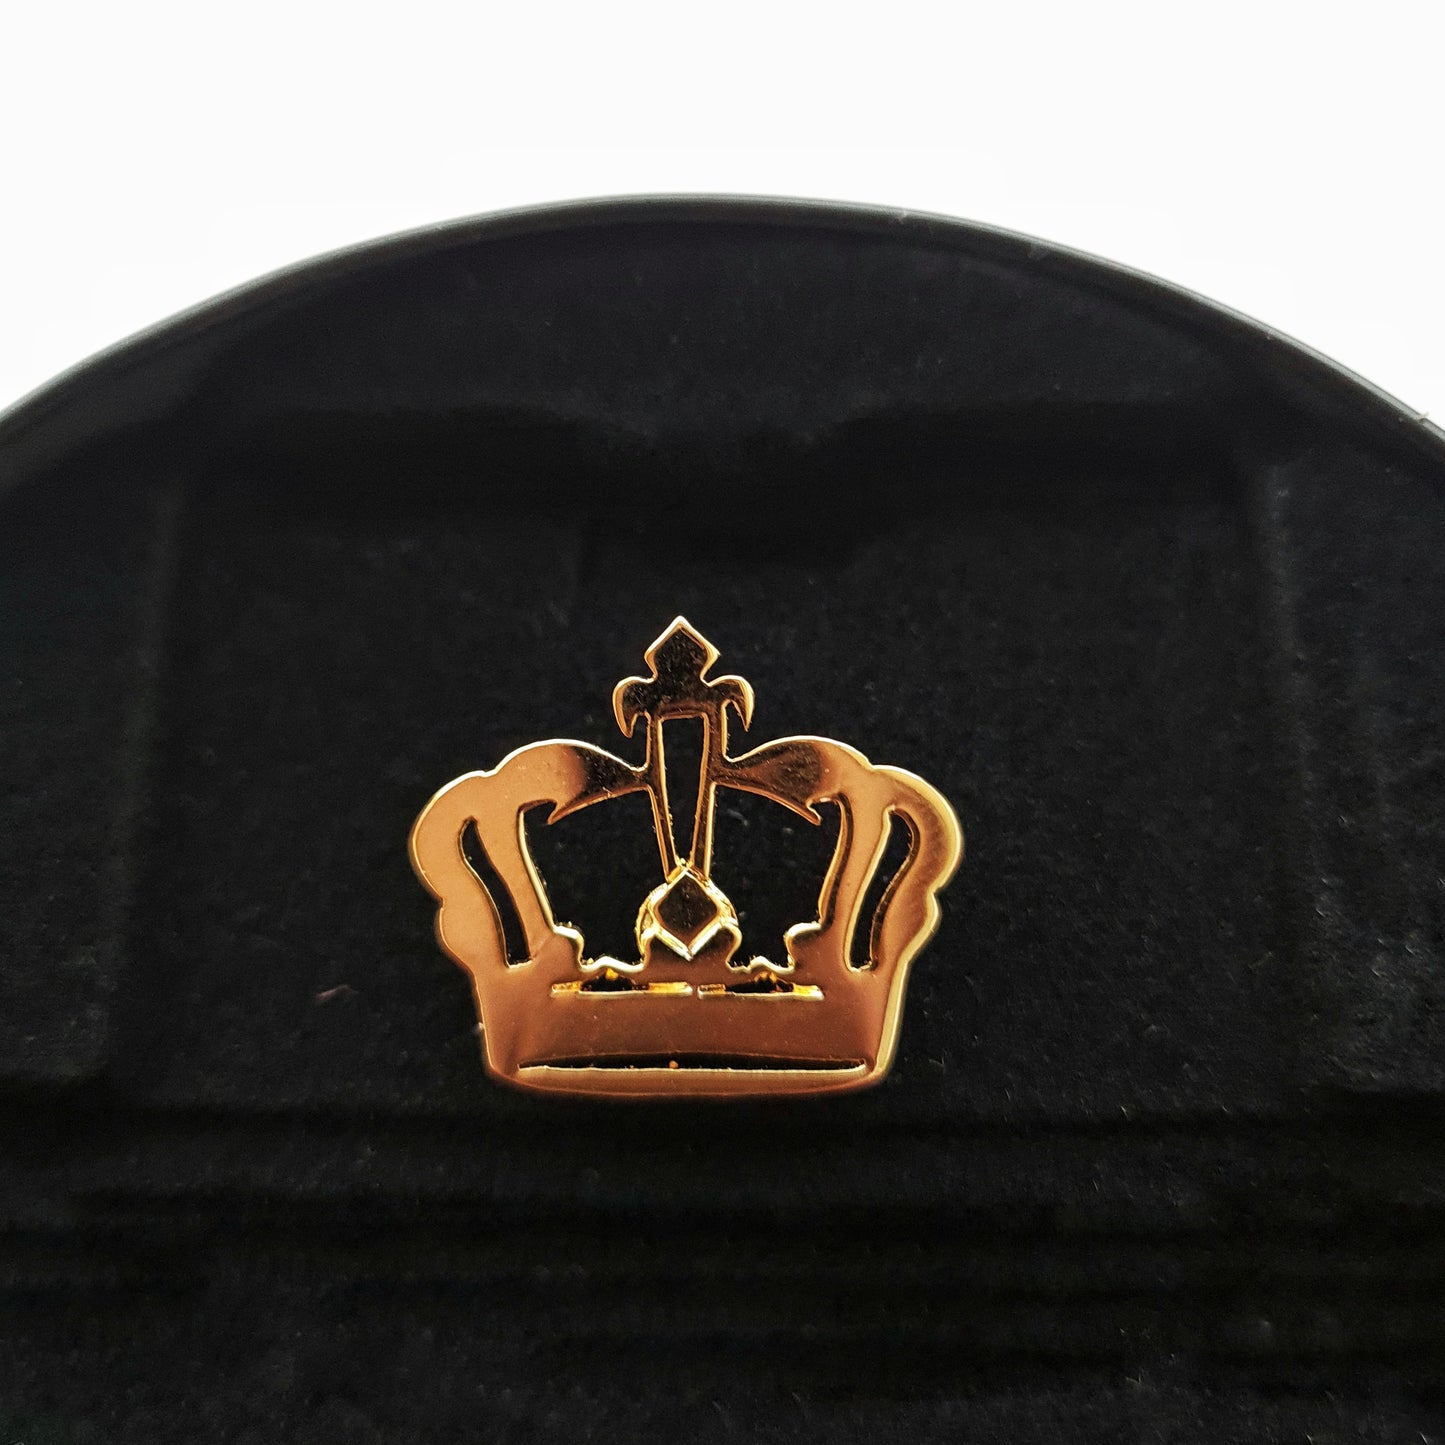 Suit Pin : King's crown